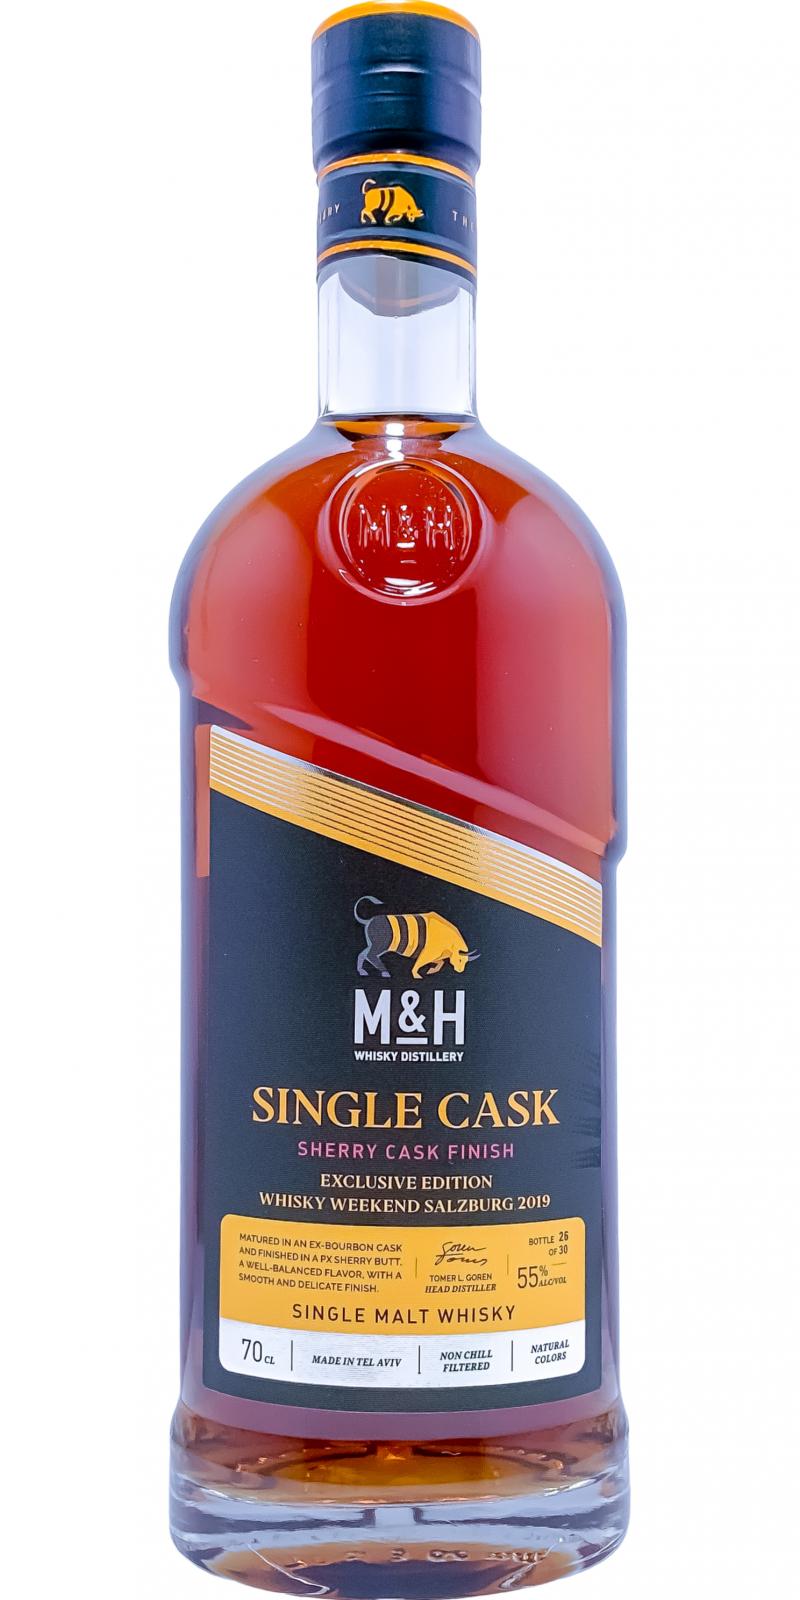 M&H Whisky Weekend Salzburg 2019 Exclusive Edition 55% 700ml